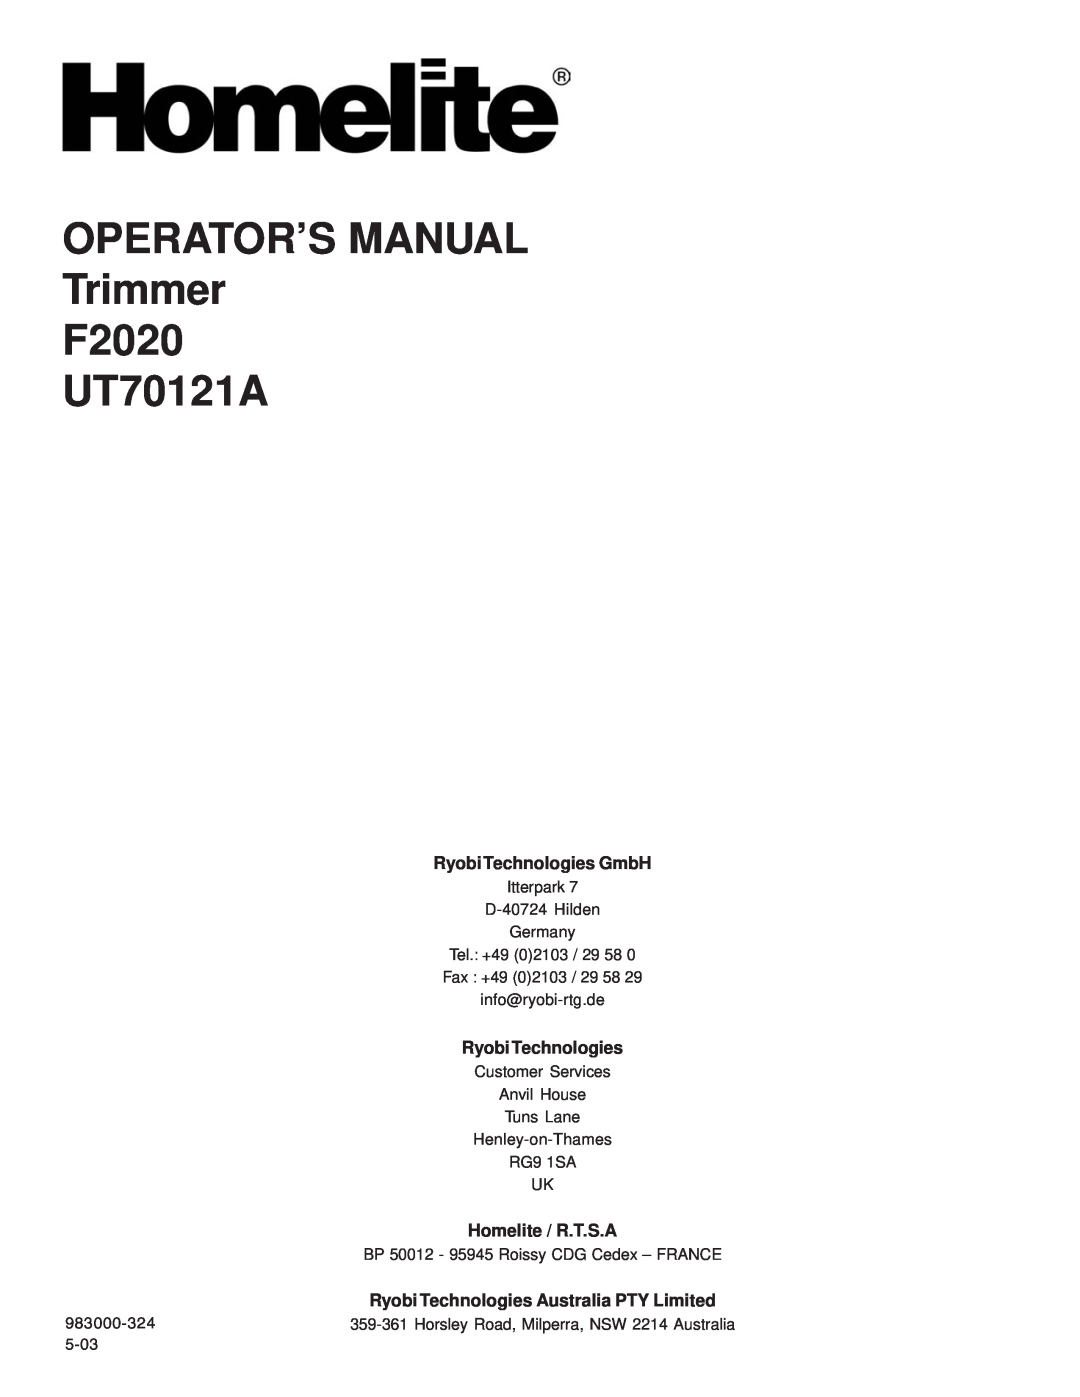 Homelite manual Ryobi Technologies GmbH, OPERATOR’S MANUAL Trimmer F2020 UT70121A, Homelite / R.T.S.A, 983000-324, 5-03 